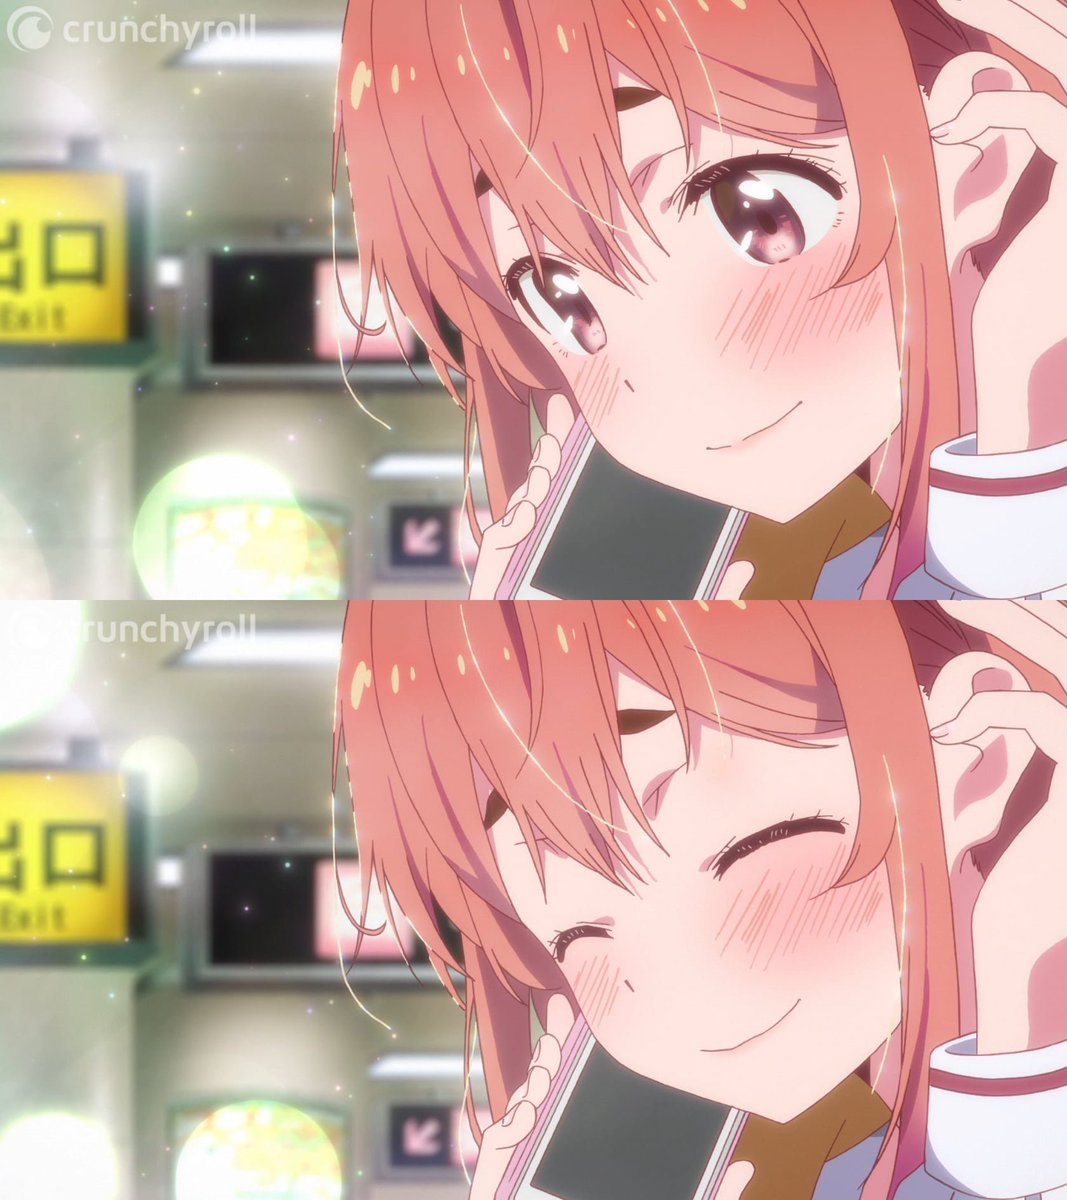 Crunchyroll.pt - O sorriso mais bonito 🥰❤ ⠀⠀⠀⠀⠀⠀⠀⠀⠀ ~✨ Anime:  Rent-A-Girlfriend